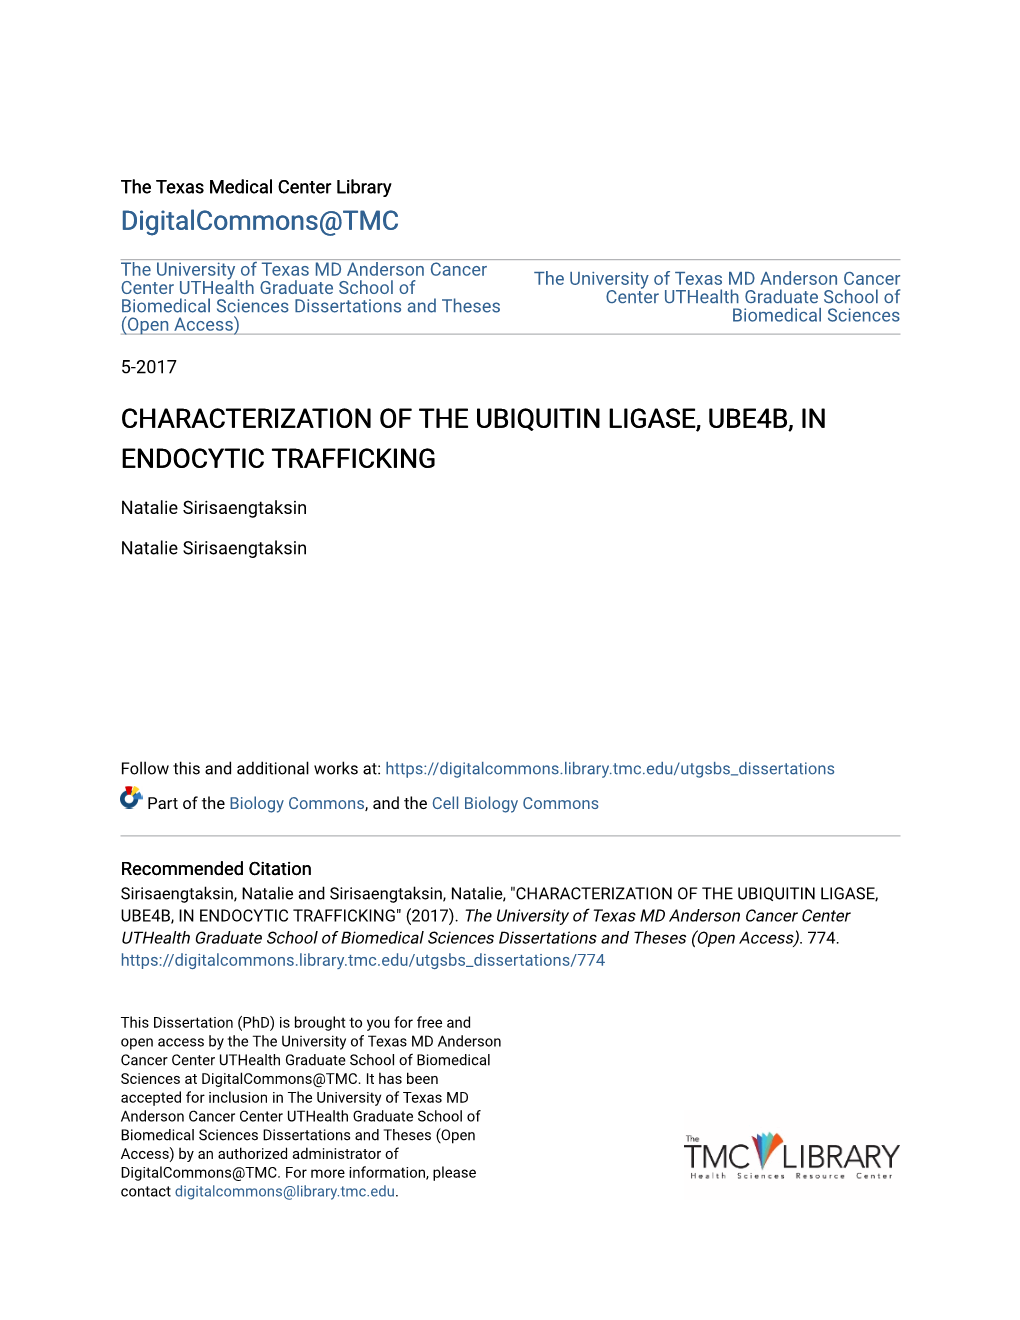 Characterization of the Ubiquitin Ligase, Ube4b, in Endocytic Trafficking